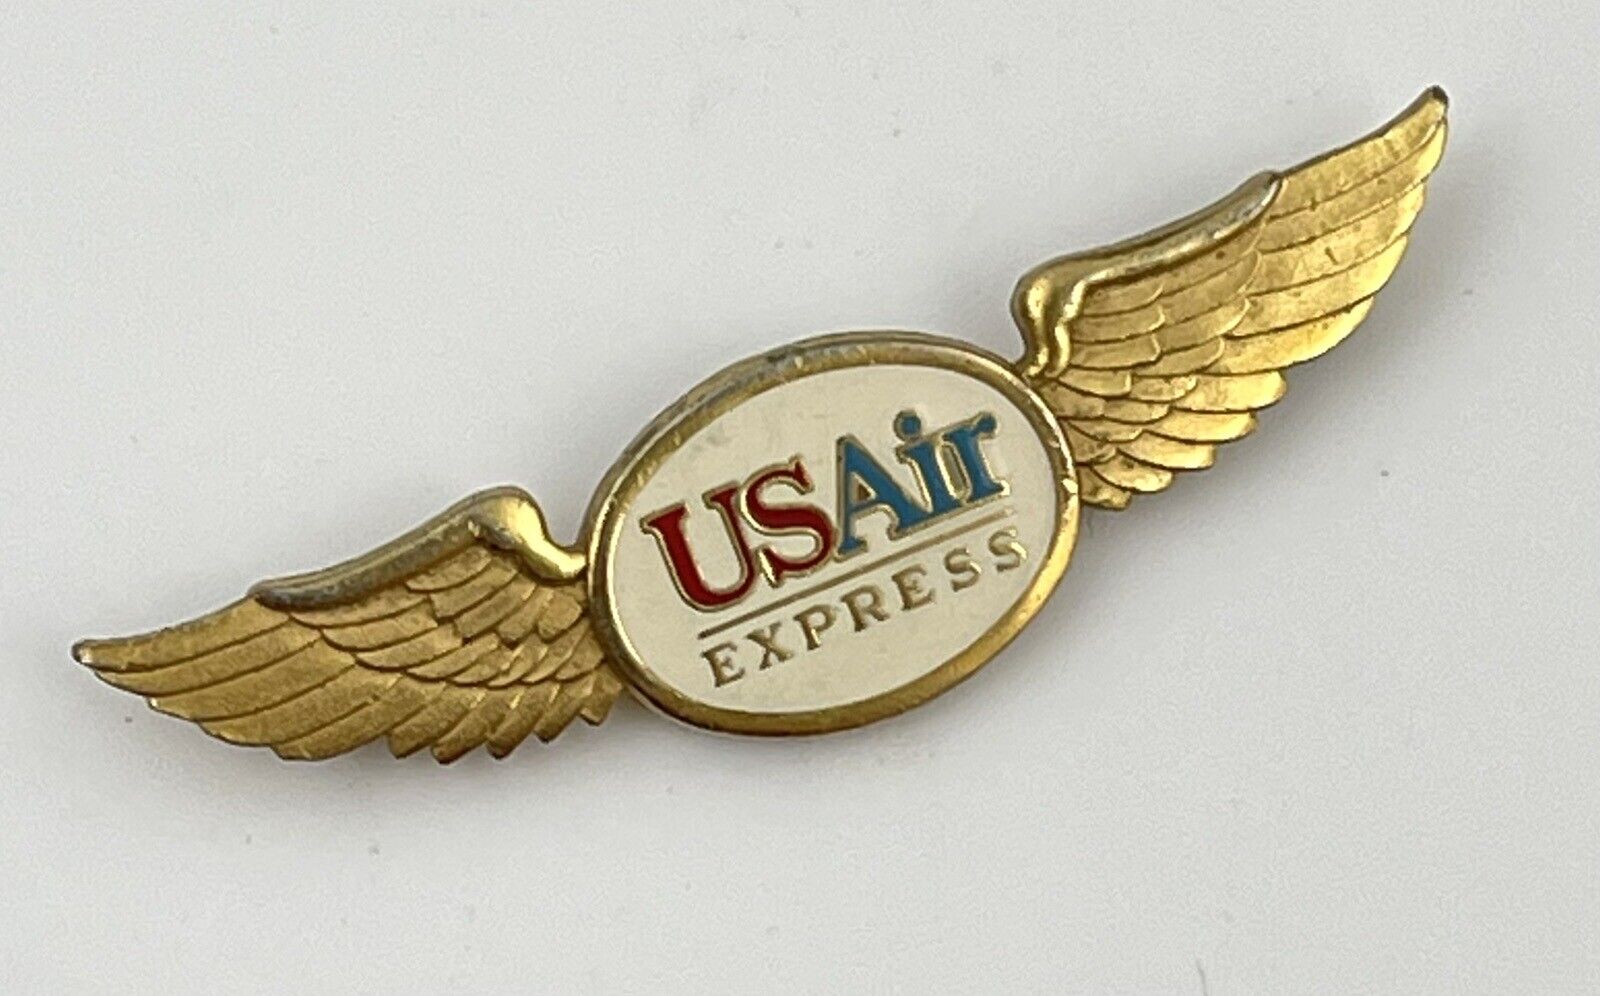 US Airways Air Express Airlines Aviation USAir Pilot Badge Pin Golden Wings